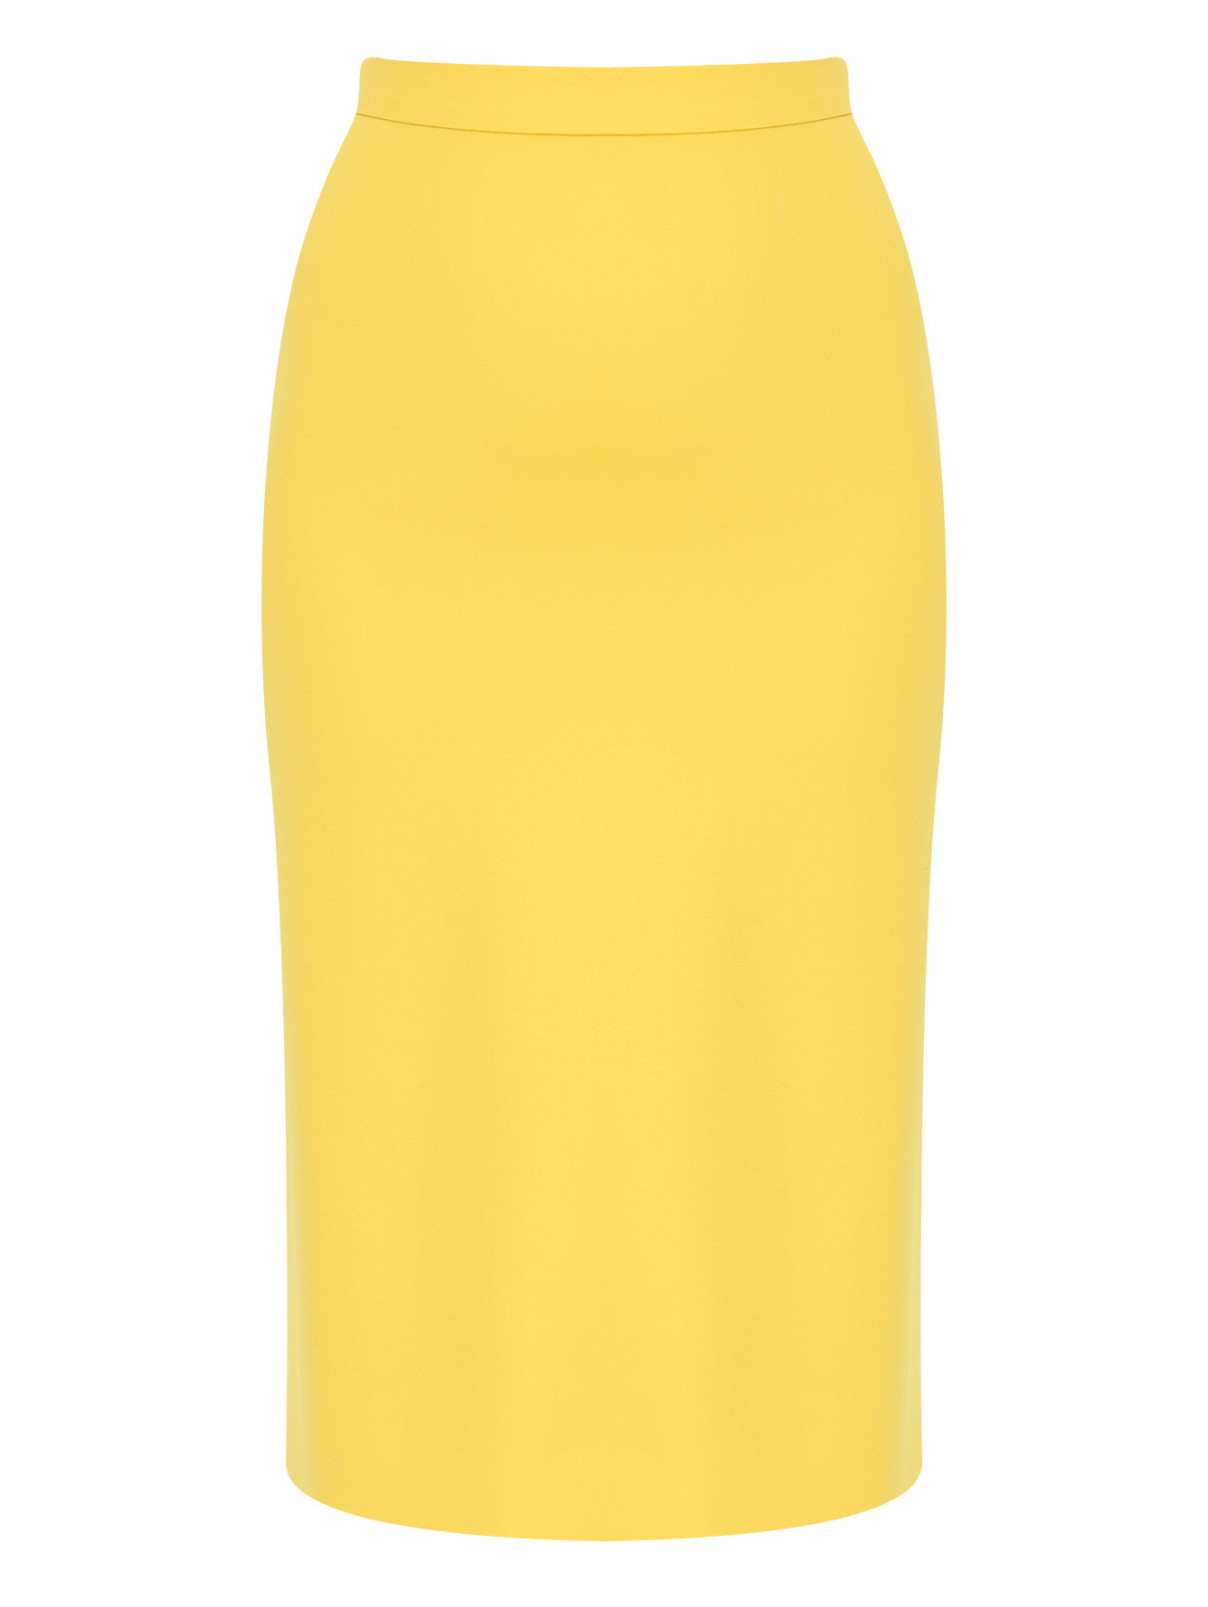 Юбка-миди из шерсти Ermanno Scervino  –  Общий вид  – Цвет:  Желтый